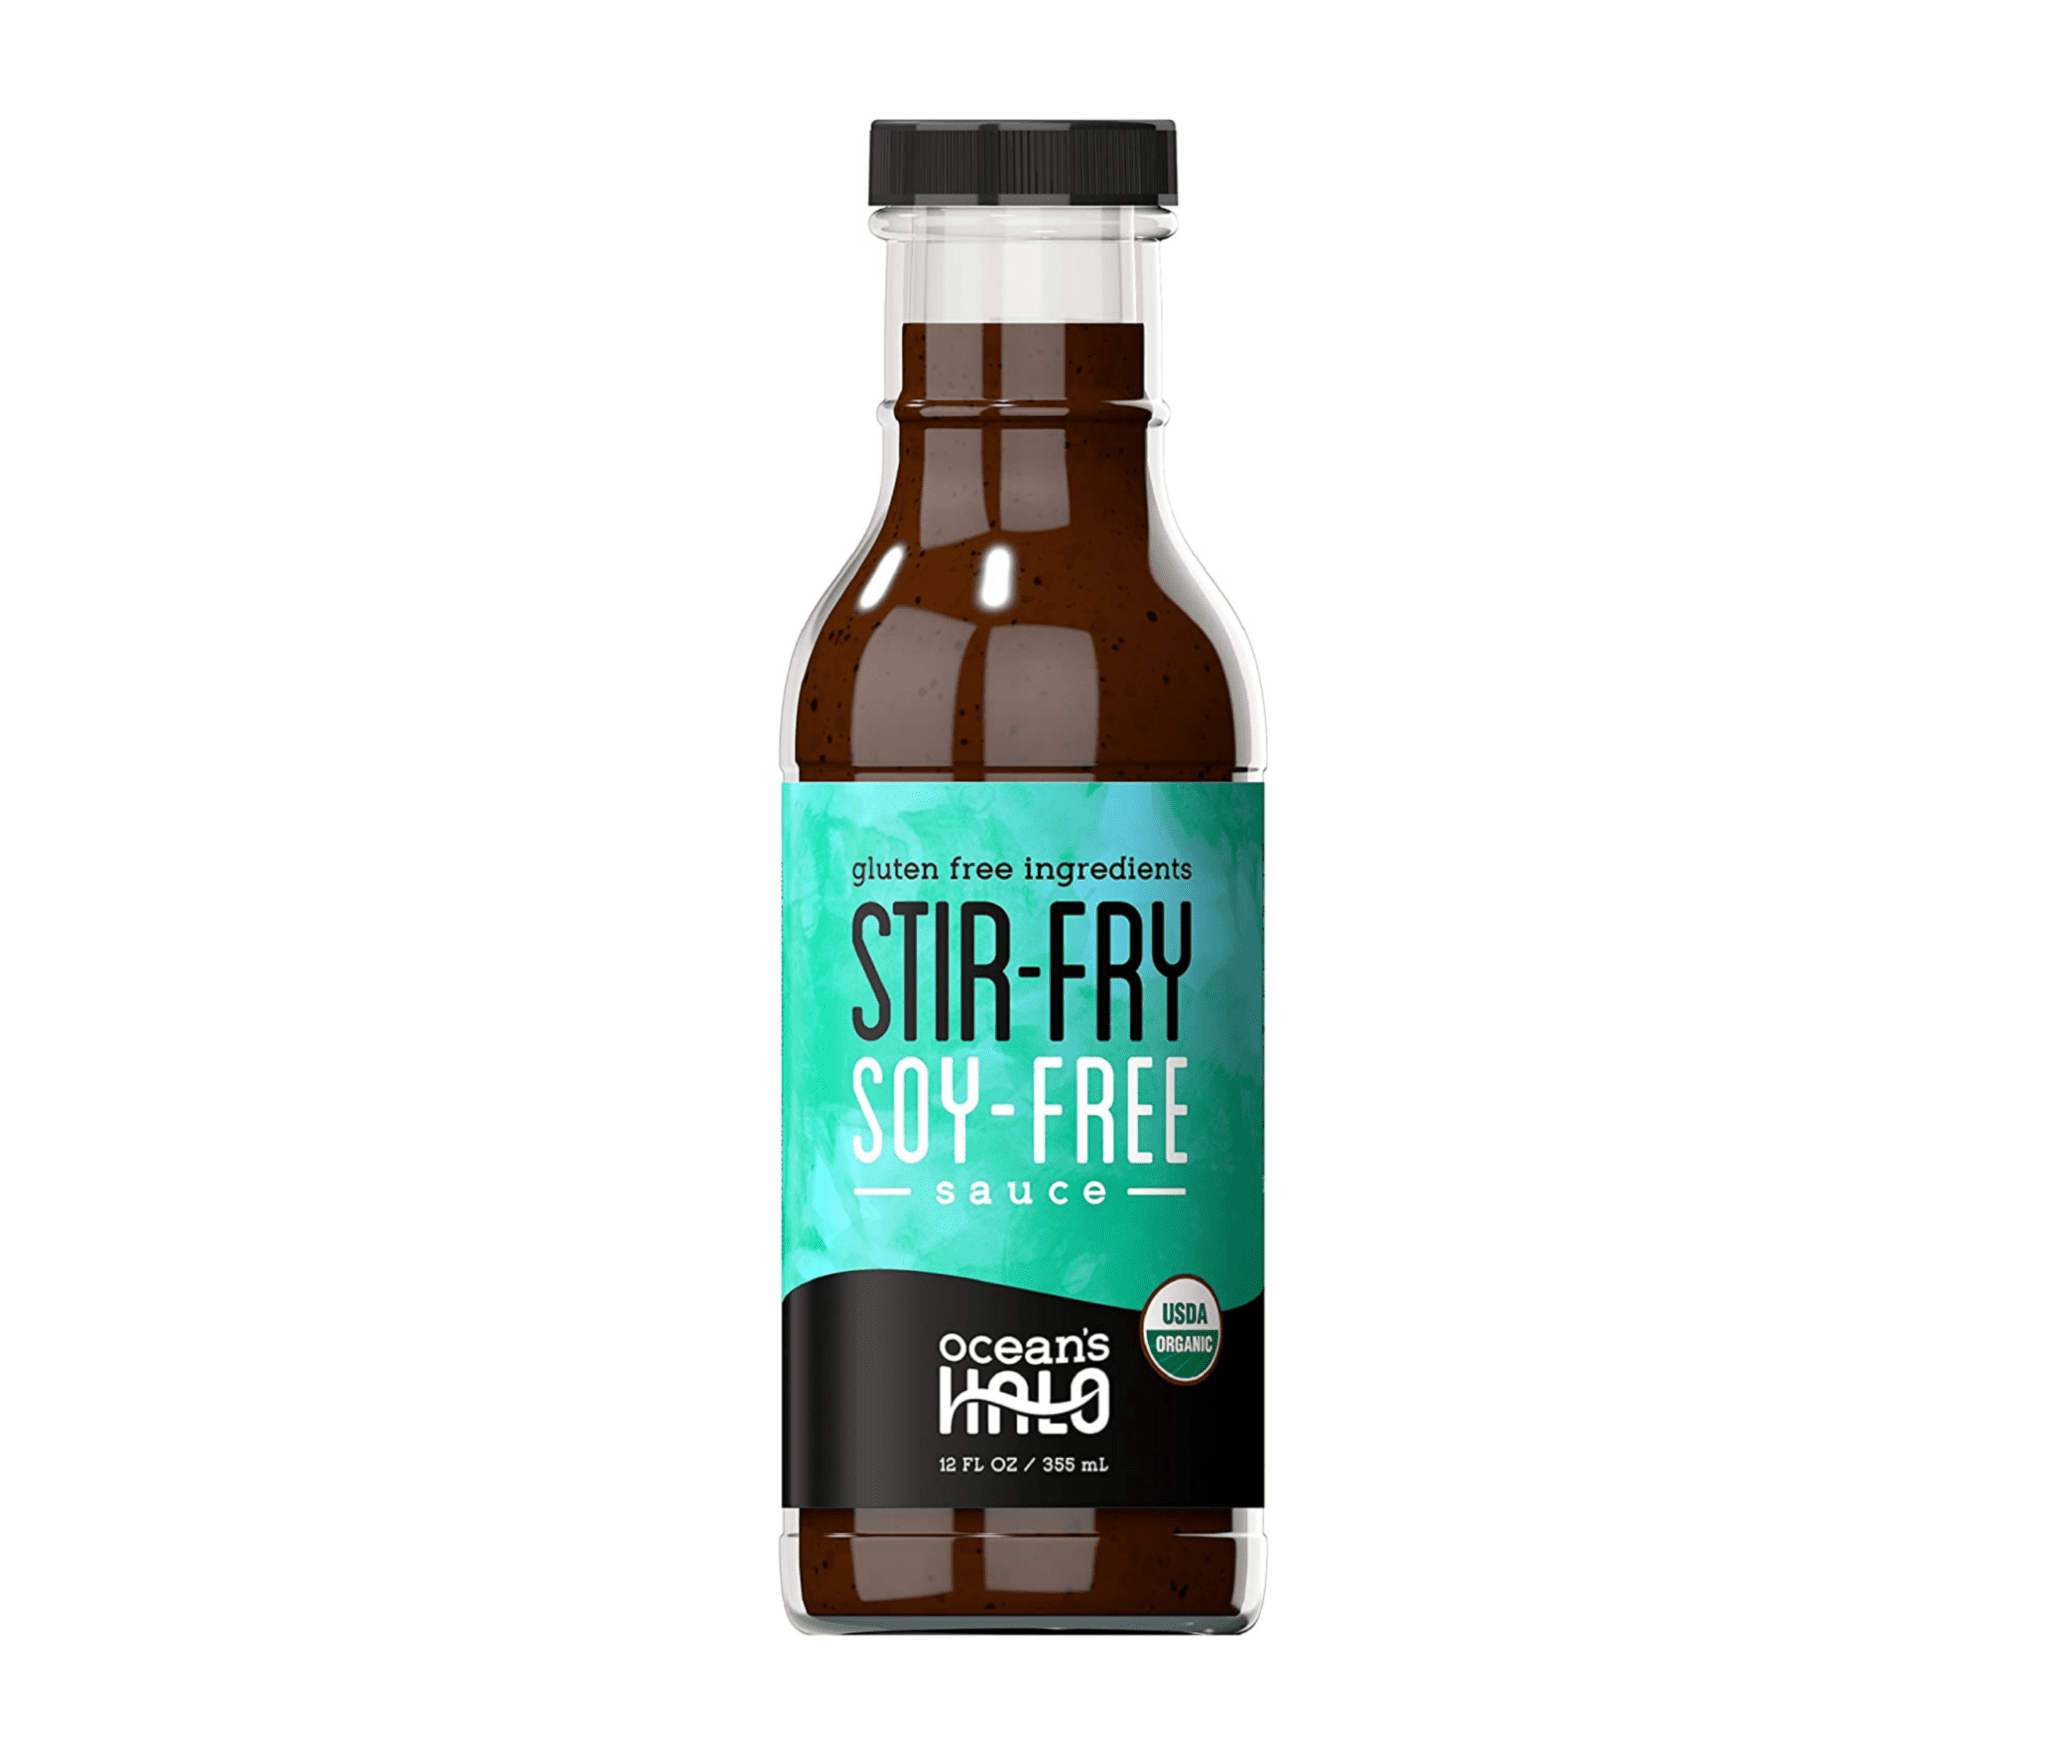 Stir Fry SoyFree Sauce by Ocean's Halo GTFO It's Vegan